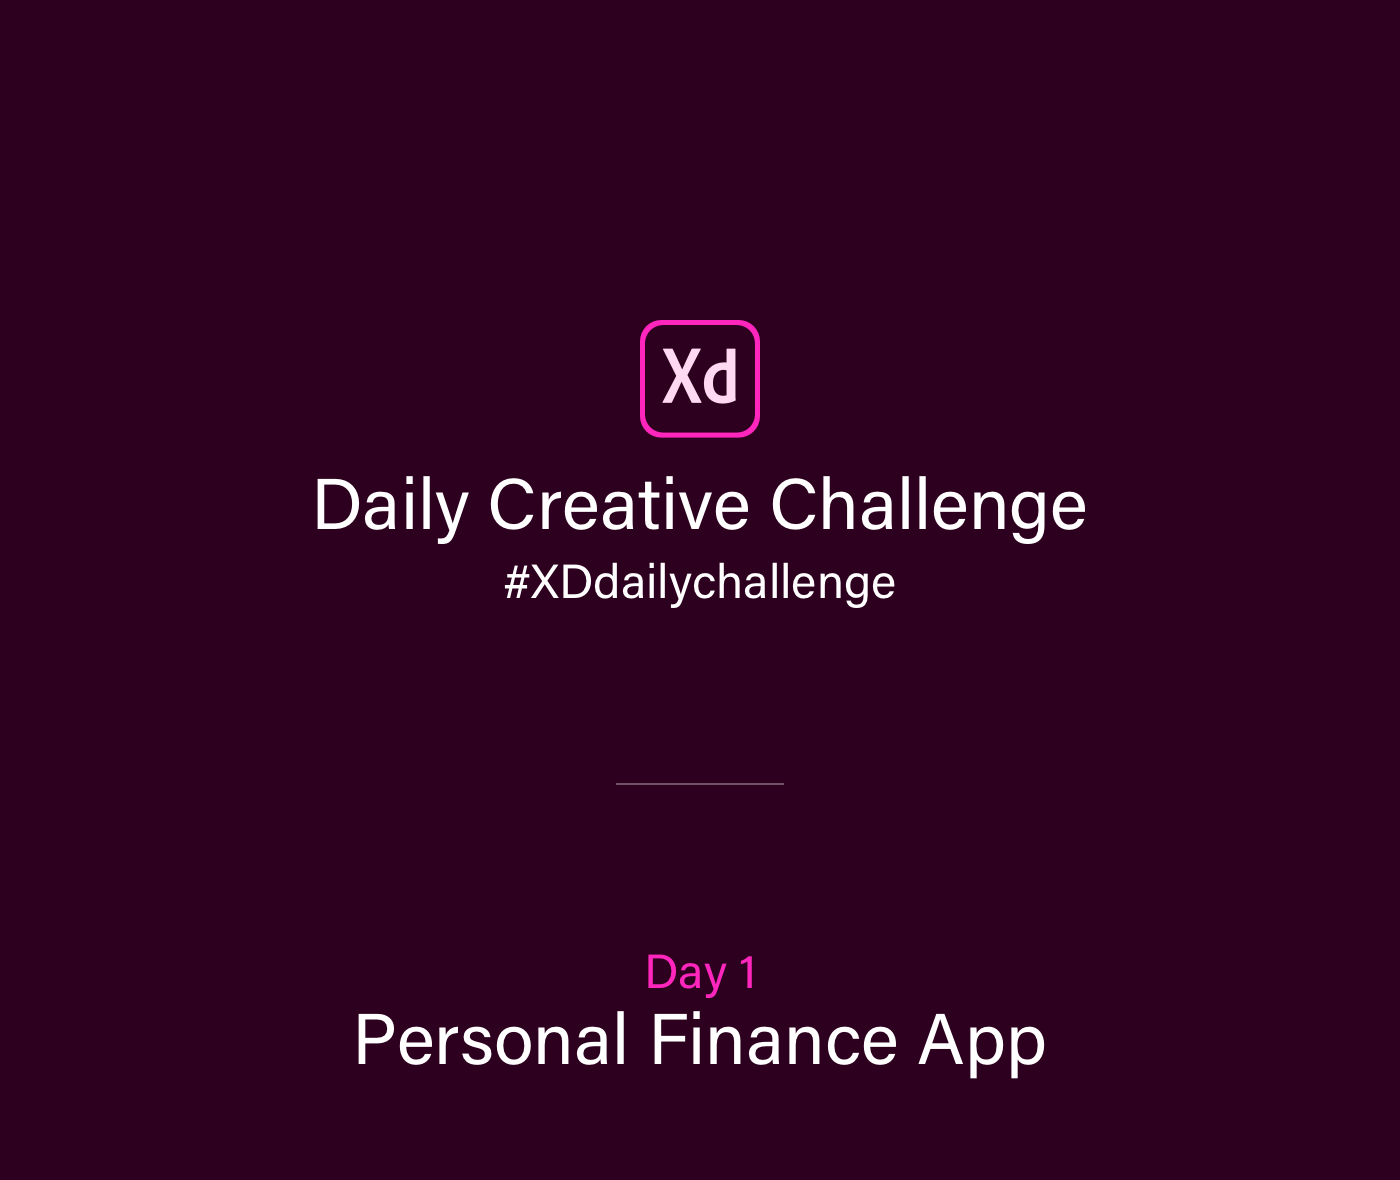 xddailychallenge MadeWithAdobeXd app finance